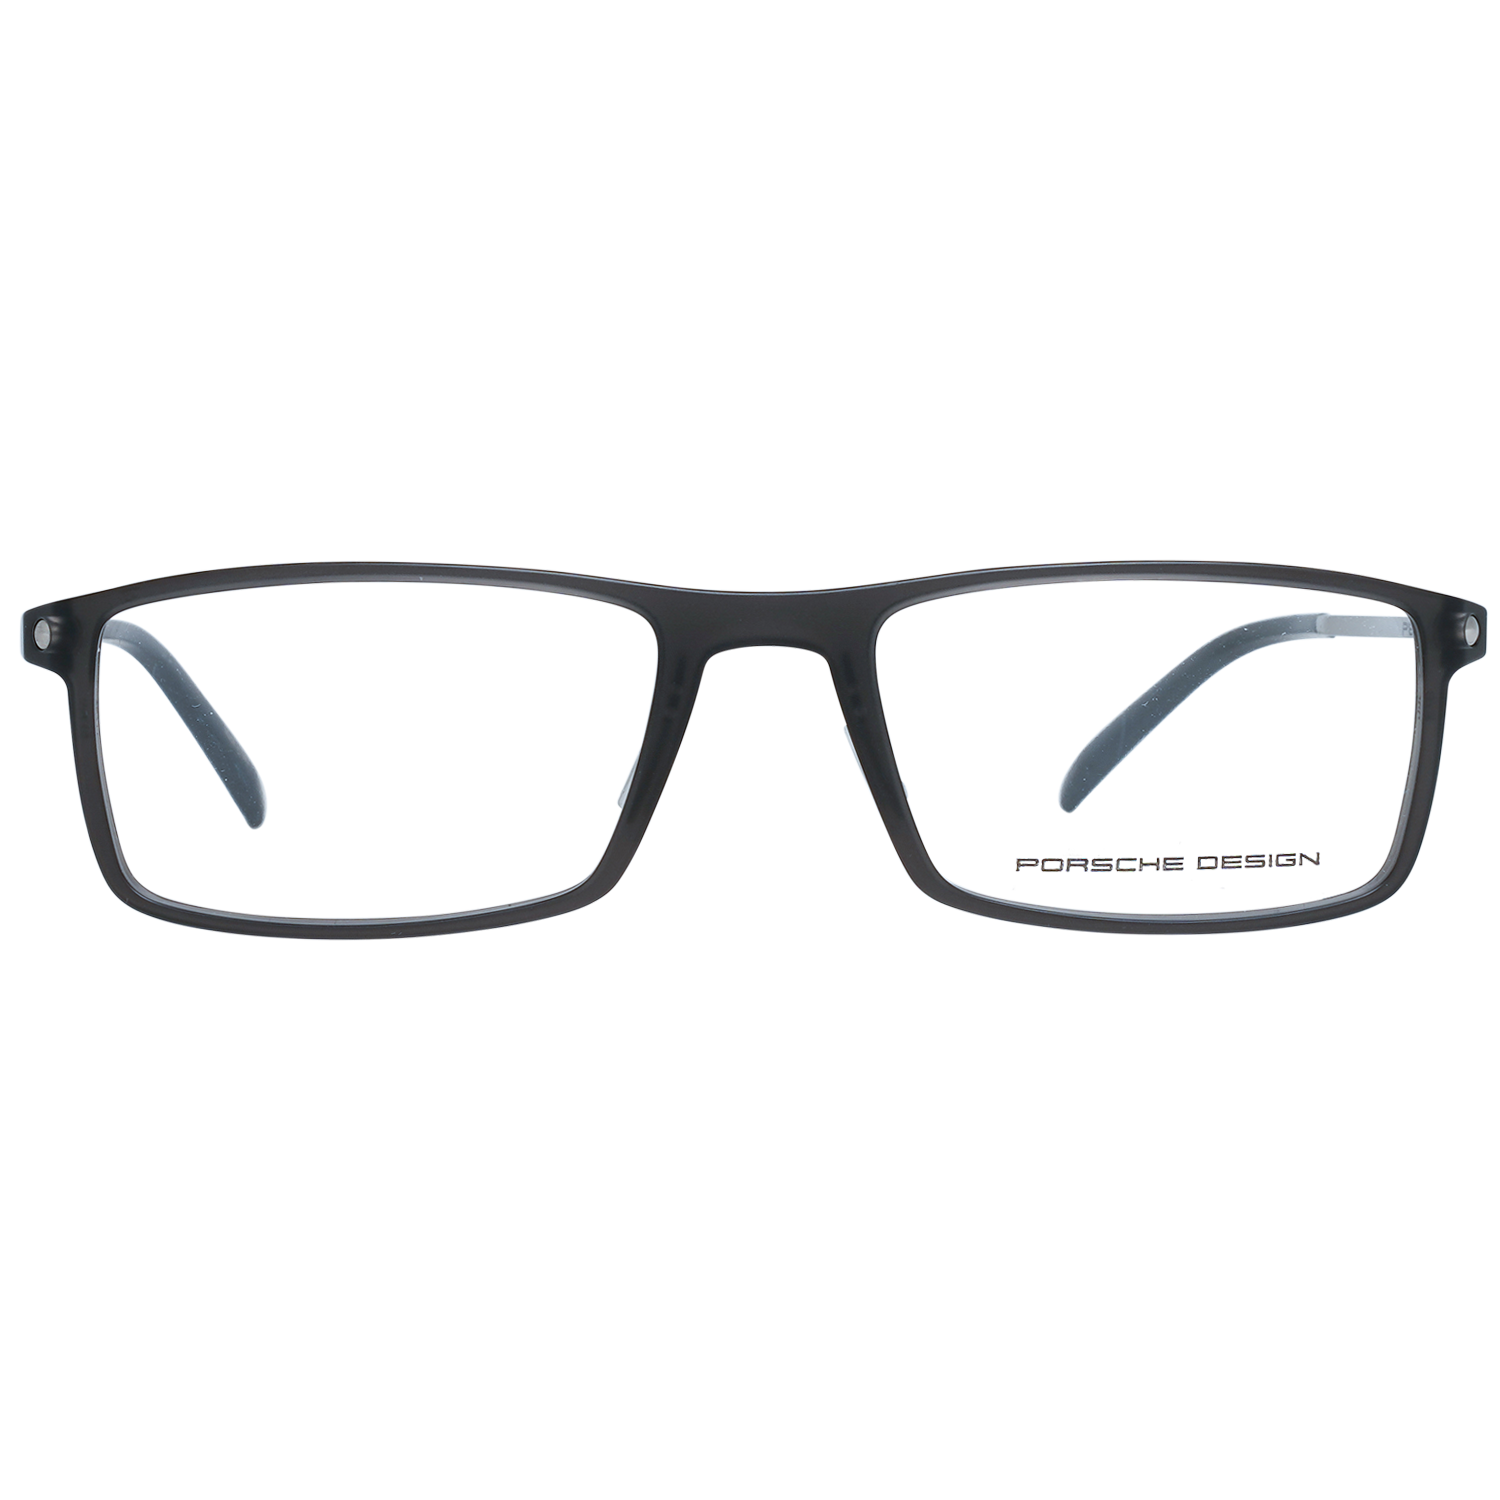 Porsche Design Men's Glasses Optical Frame Grey Rectangle P8384 C 55